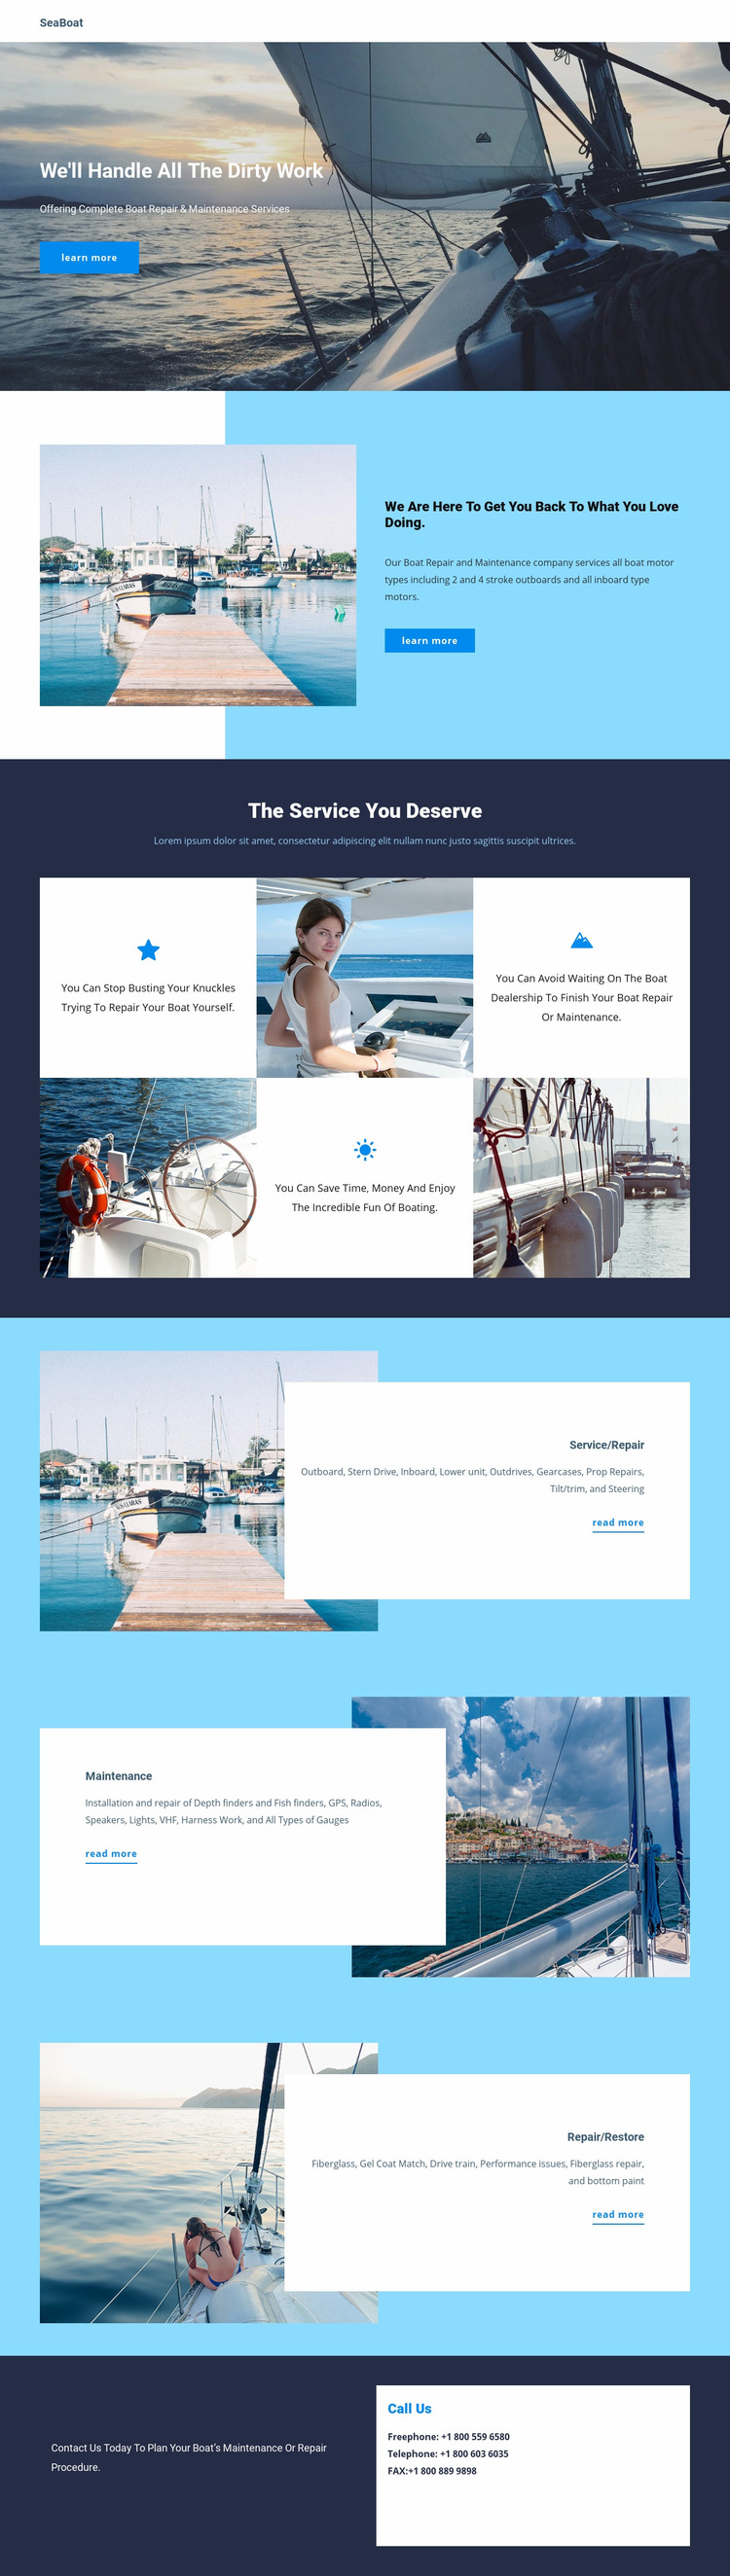 Travel on Seaboat Web Page Design